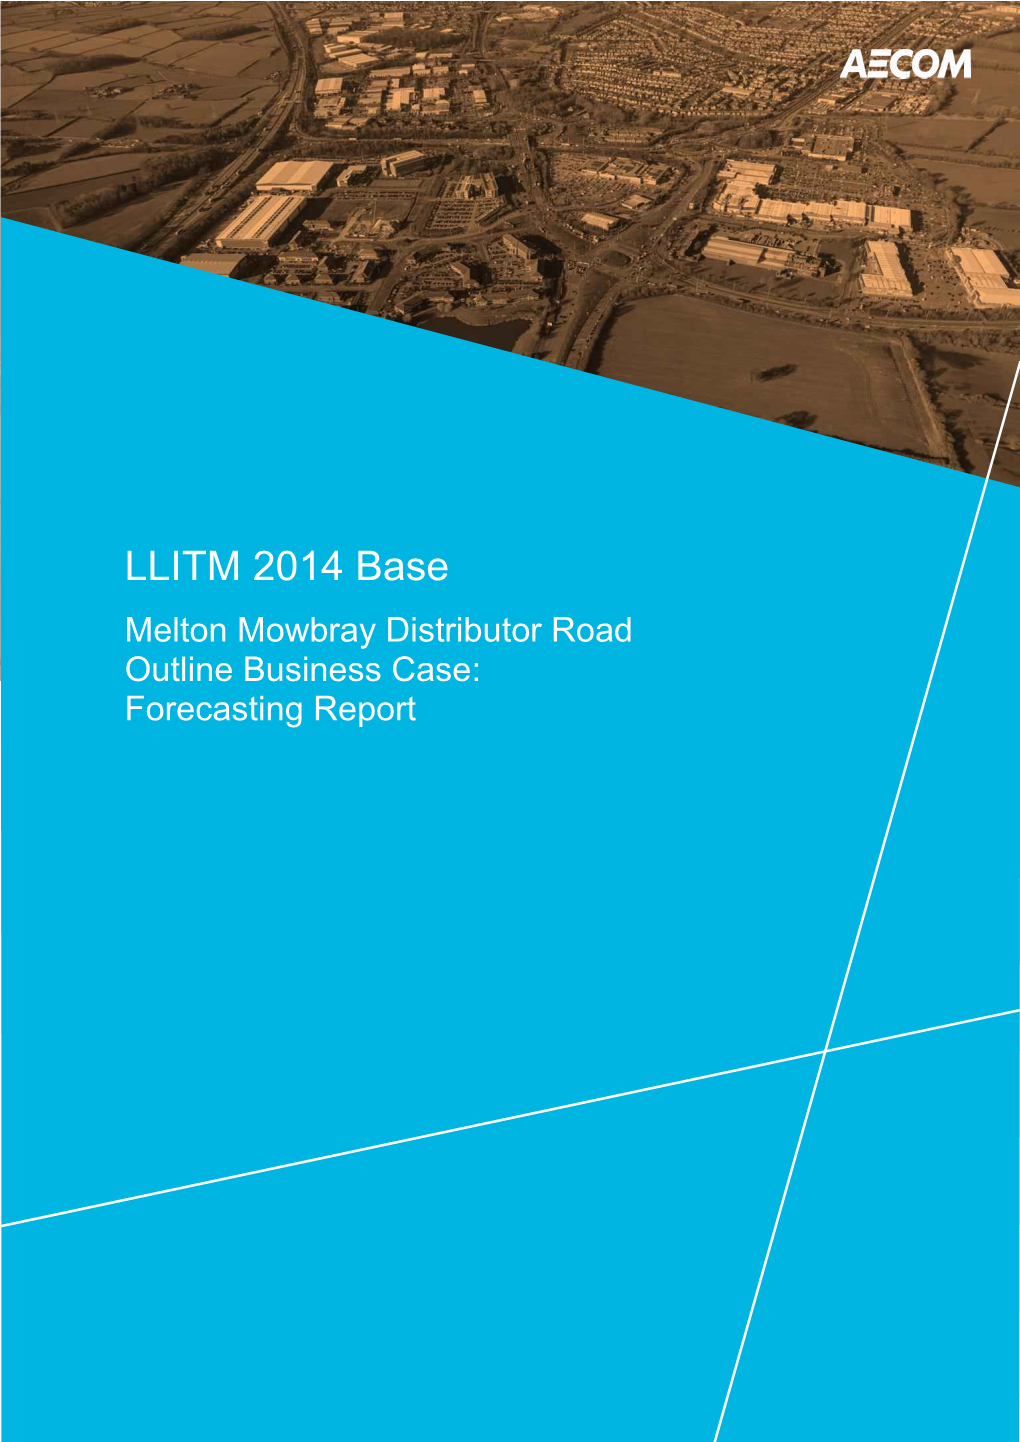 Melton Mowbray Distributor Road Outline Business Case: Forecasting Report LLITM 2014 Base Melton Mowbray Distributor Road OBC Forecasting Report